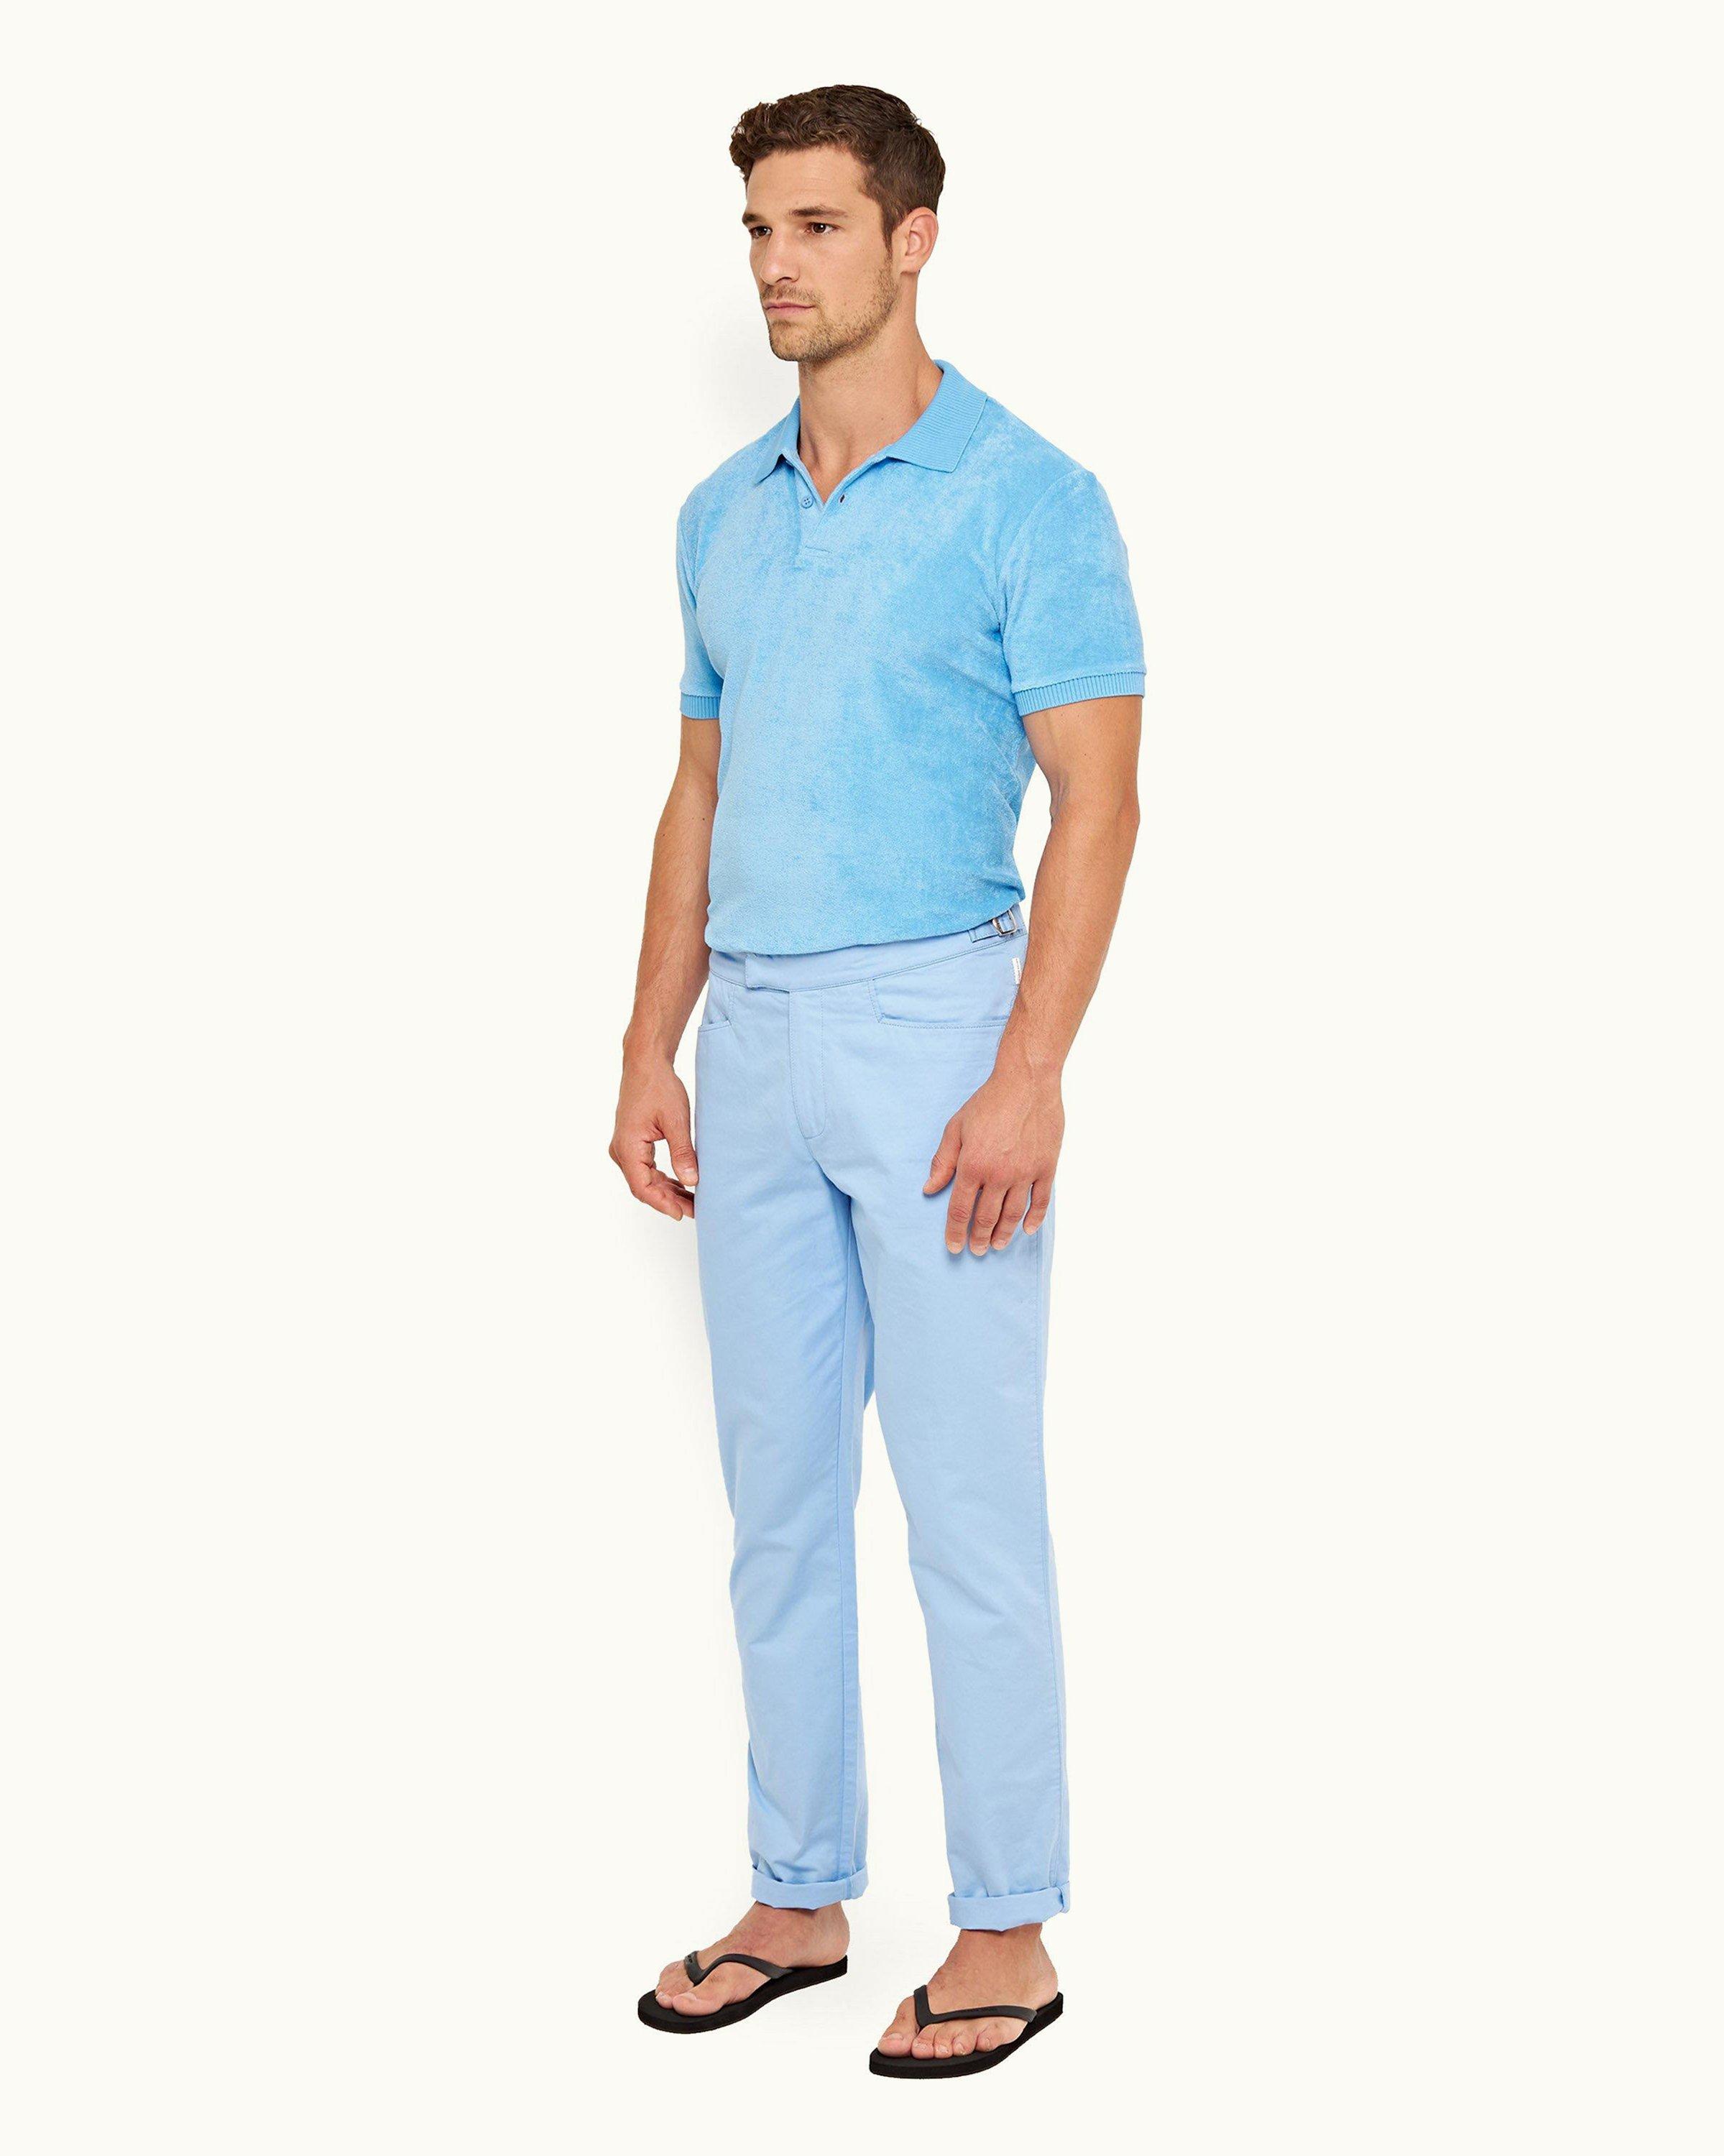 Oxford Blue Colour Trousers for Men - Everywear Pants by Aristobrat